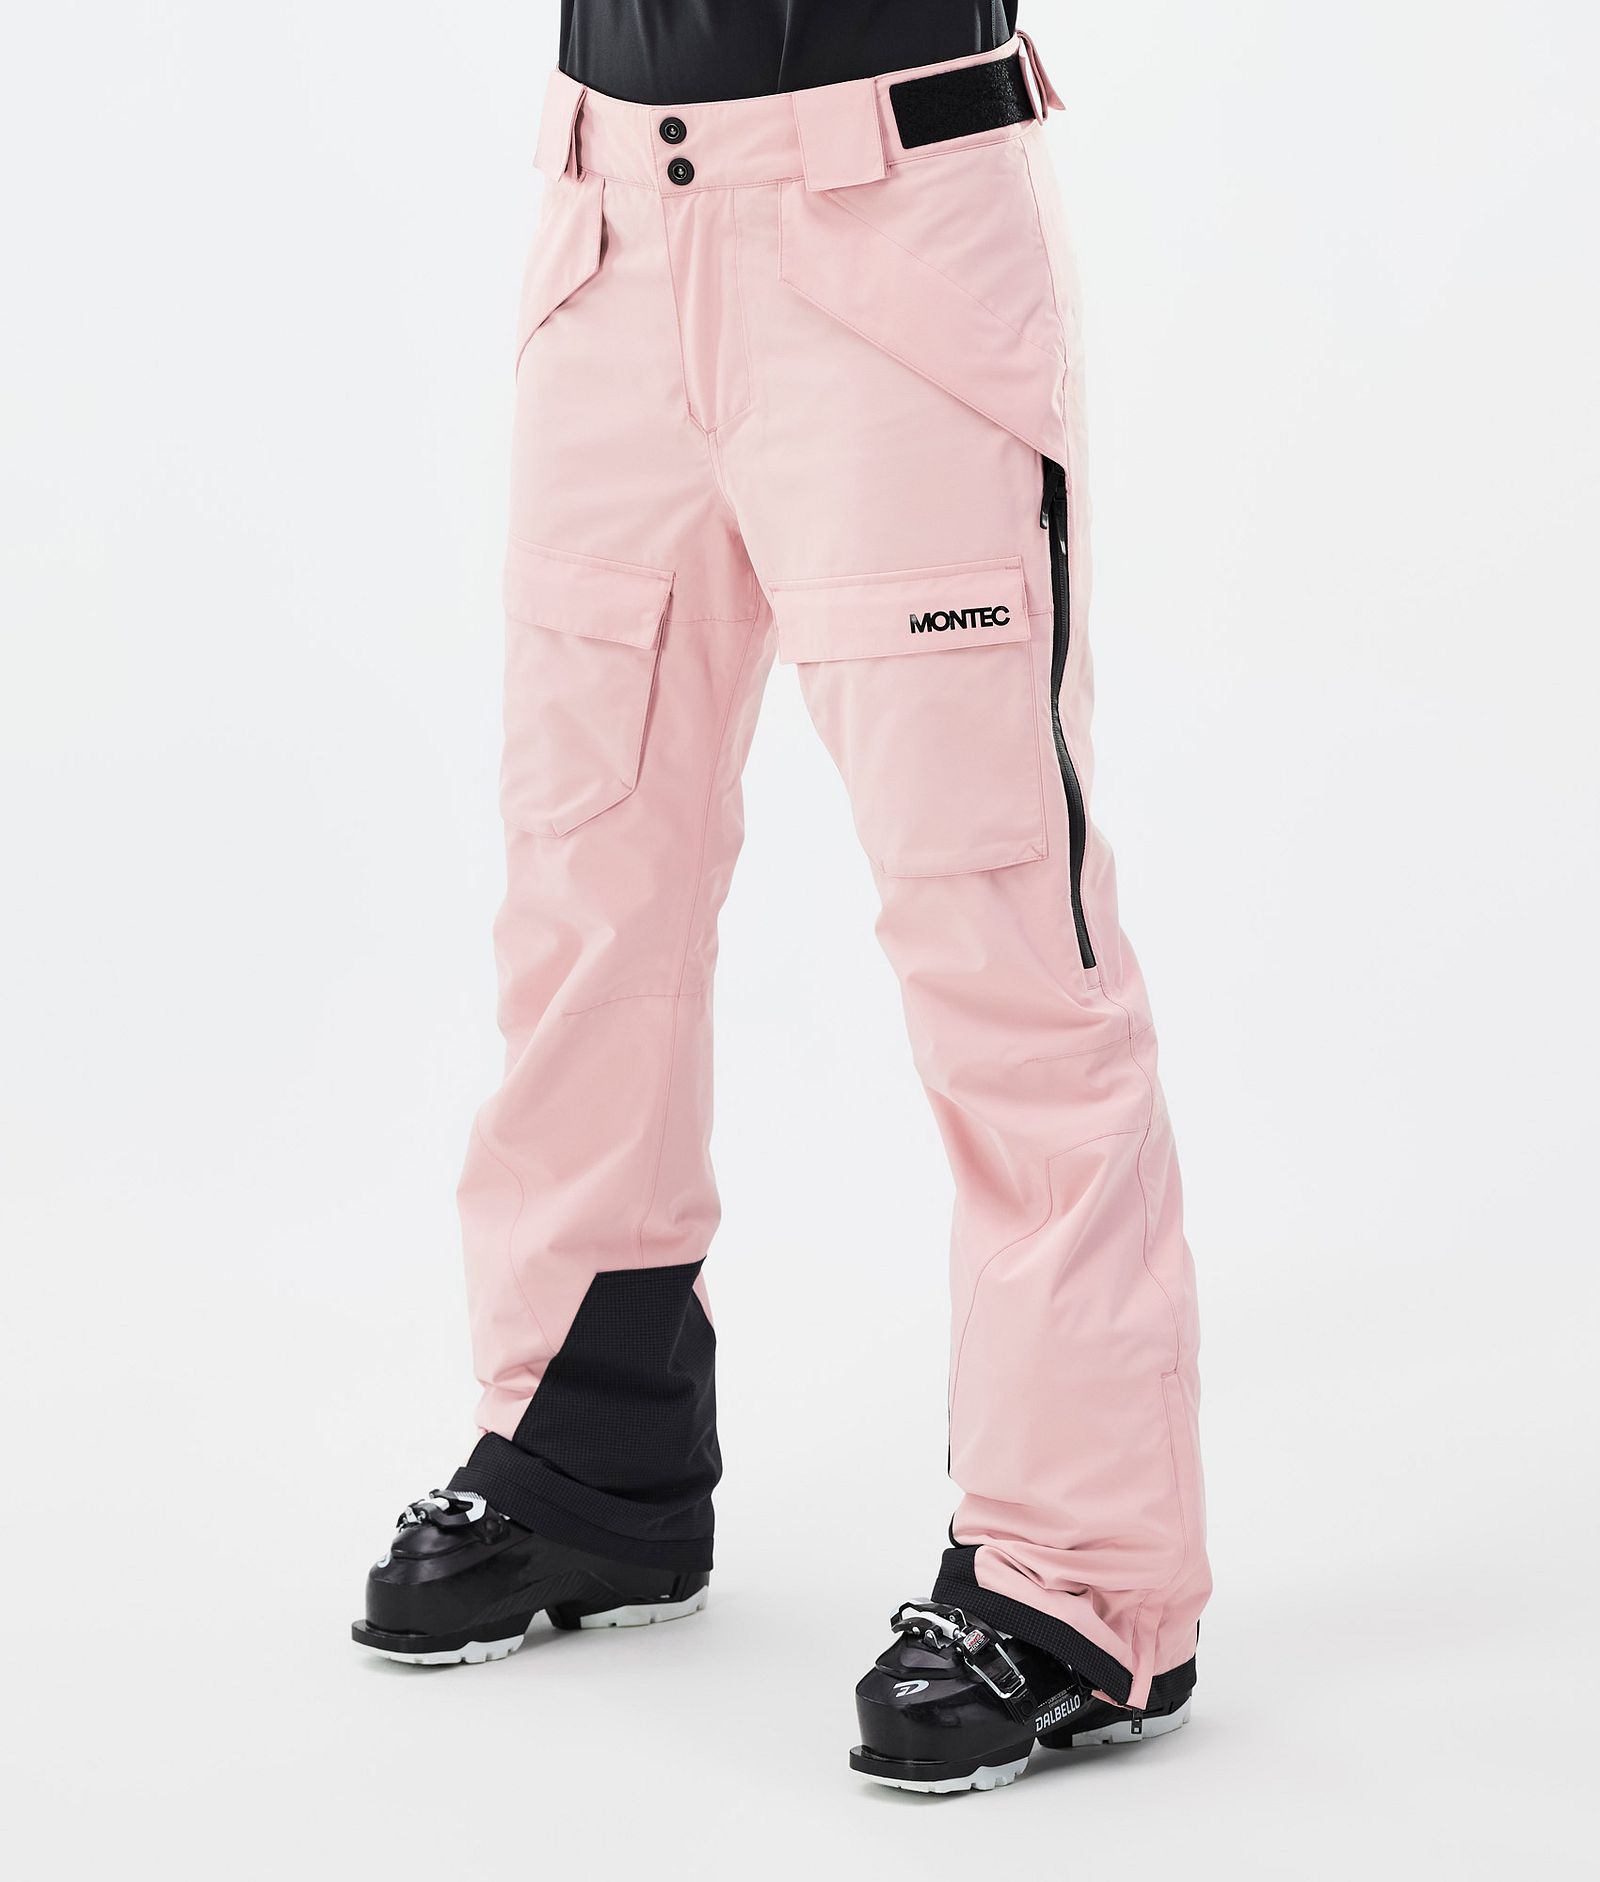 Montec Kirin W Women's Ski Pants Soft Pink